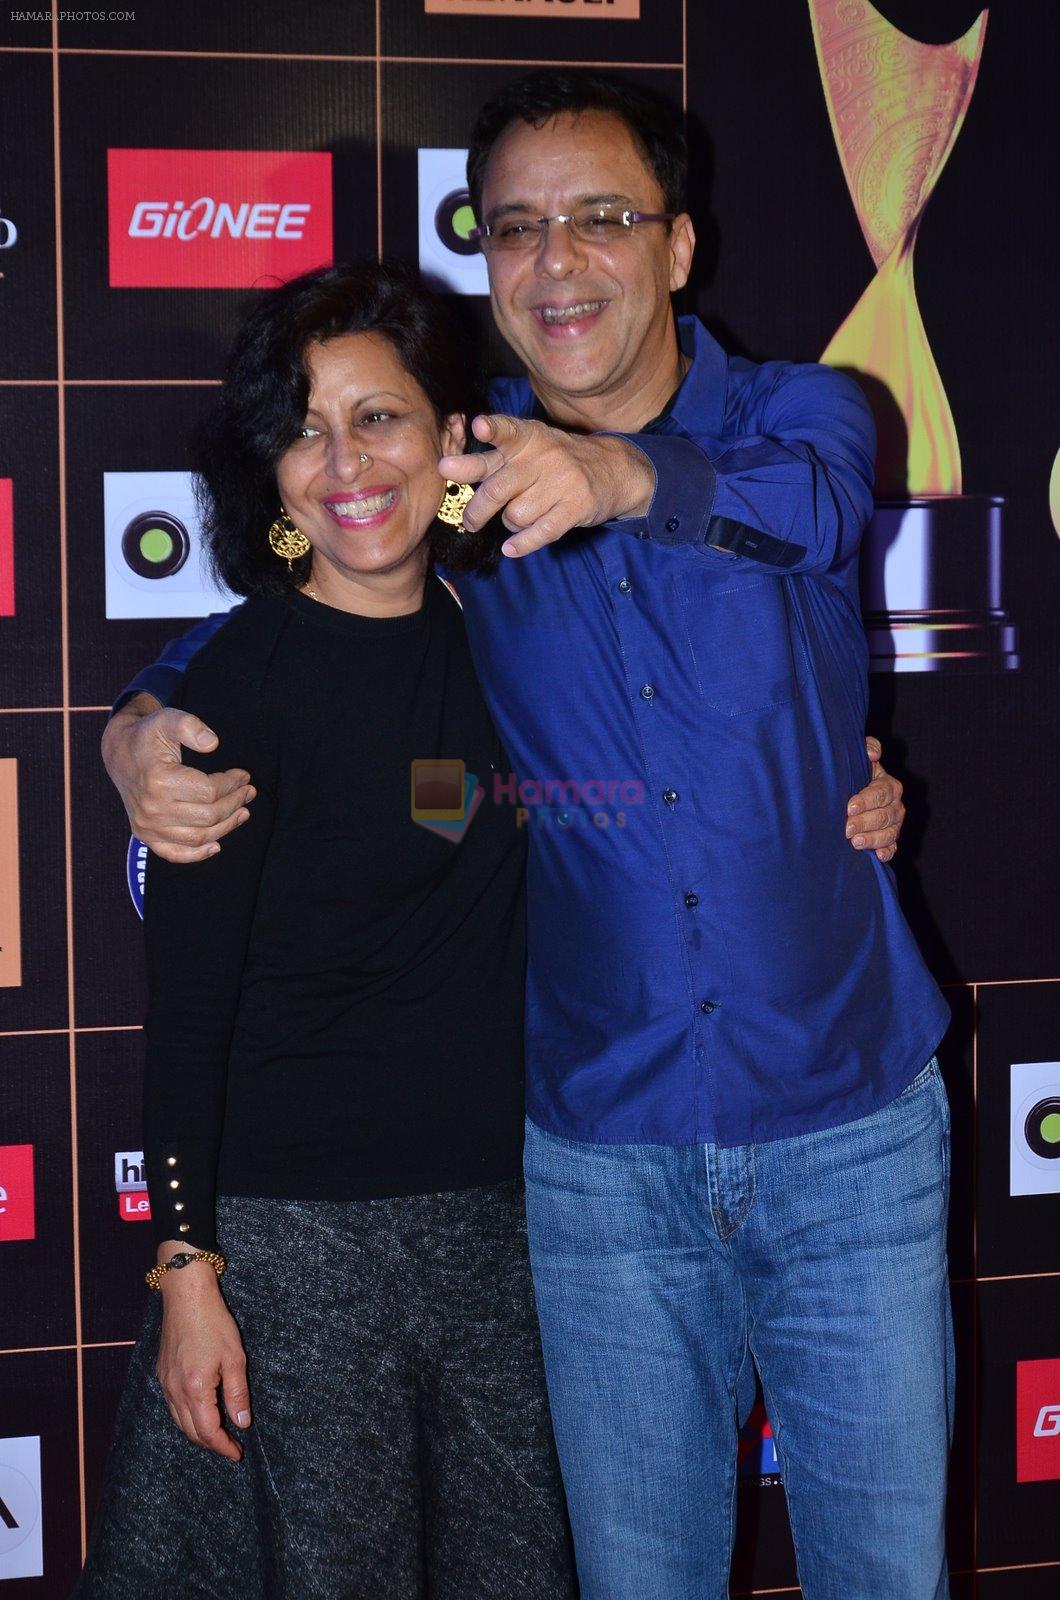 Vidhu Vinod Chopra at Producers Guild Awards 2015 in Mumbai on 11th Jan 2015